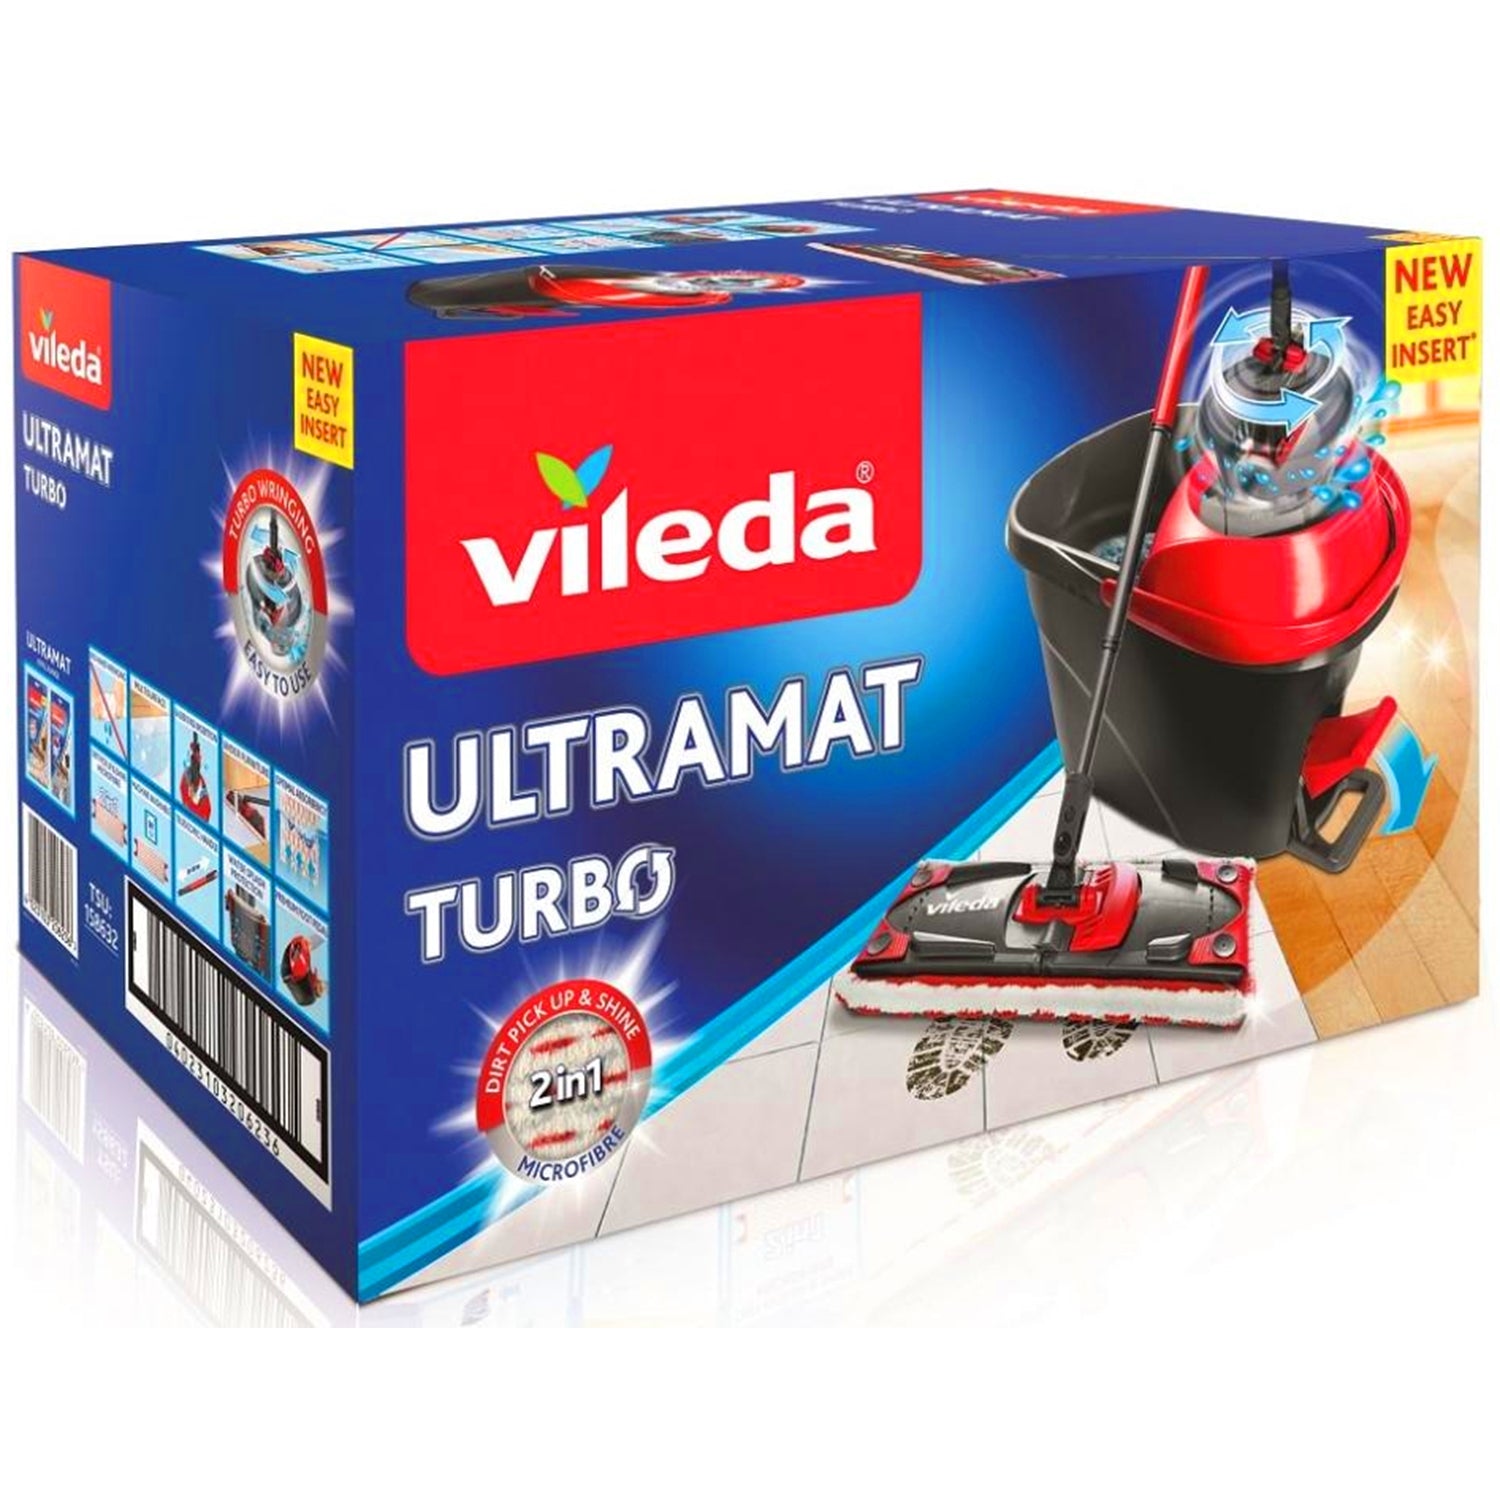 2pcs Microfibre Mop head replacement cleaning cloth For Vileda Ultramax  Ultramat Turbo XL Turbo Vacuum Mop 2in1 Mop cover Reusab